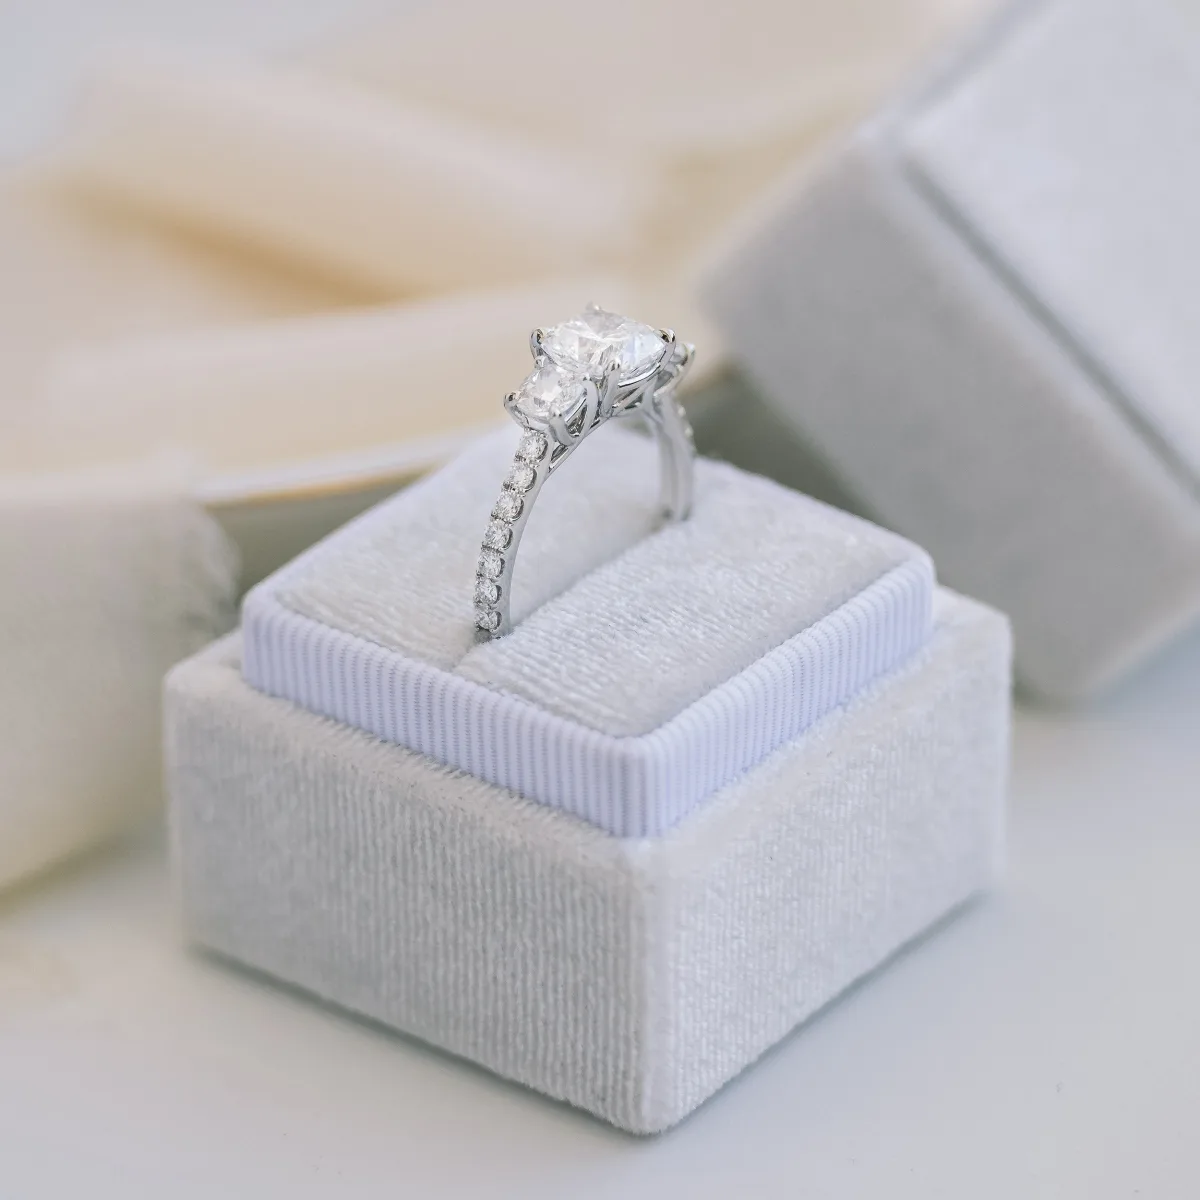 3 Carat Cushion Cut Lab Grown Diamond Platinum Ring, 3 Carat